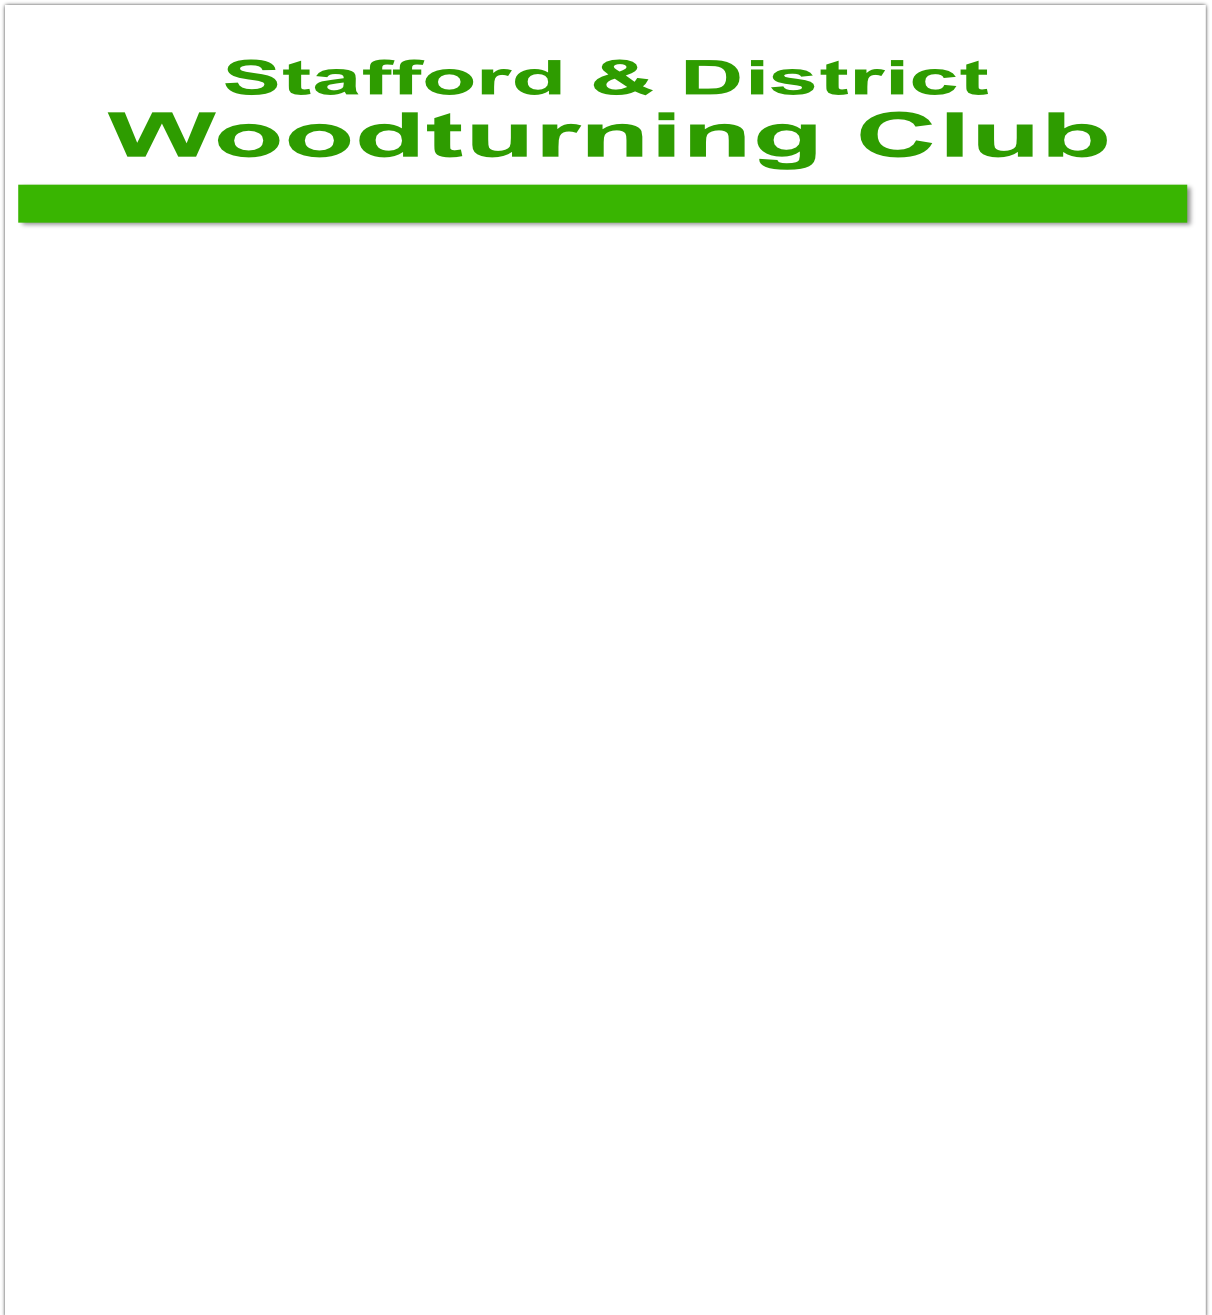 Woodturning Club
